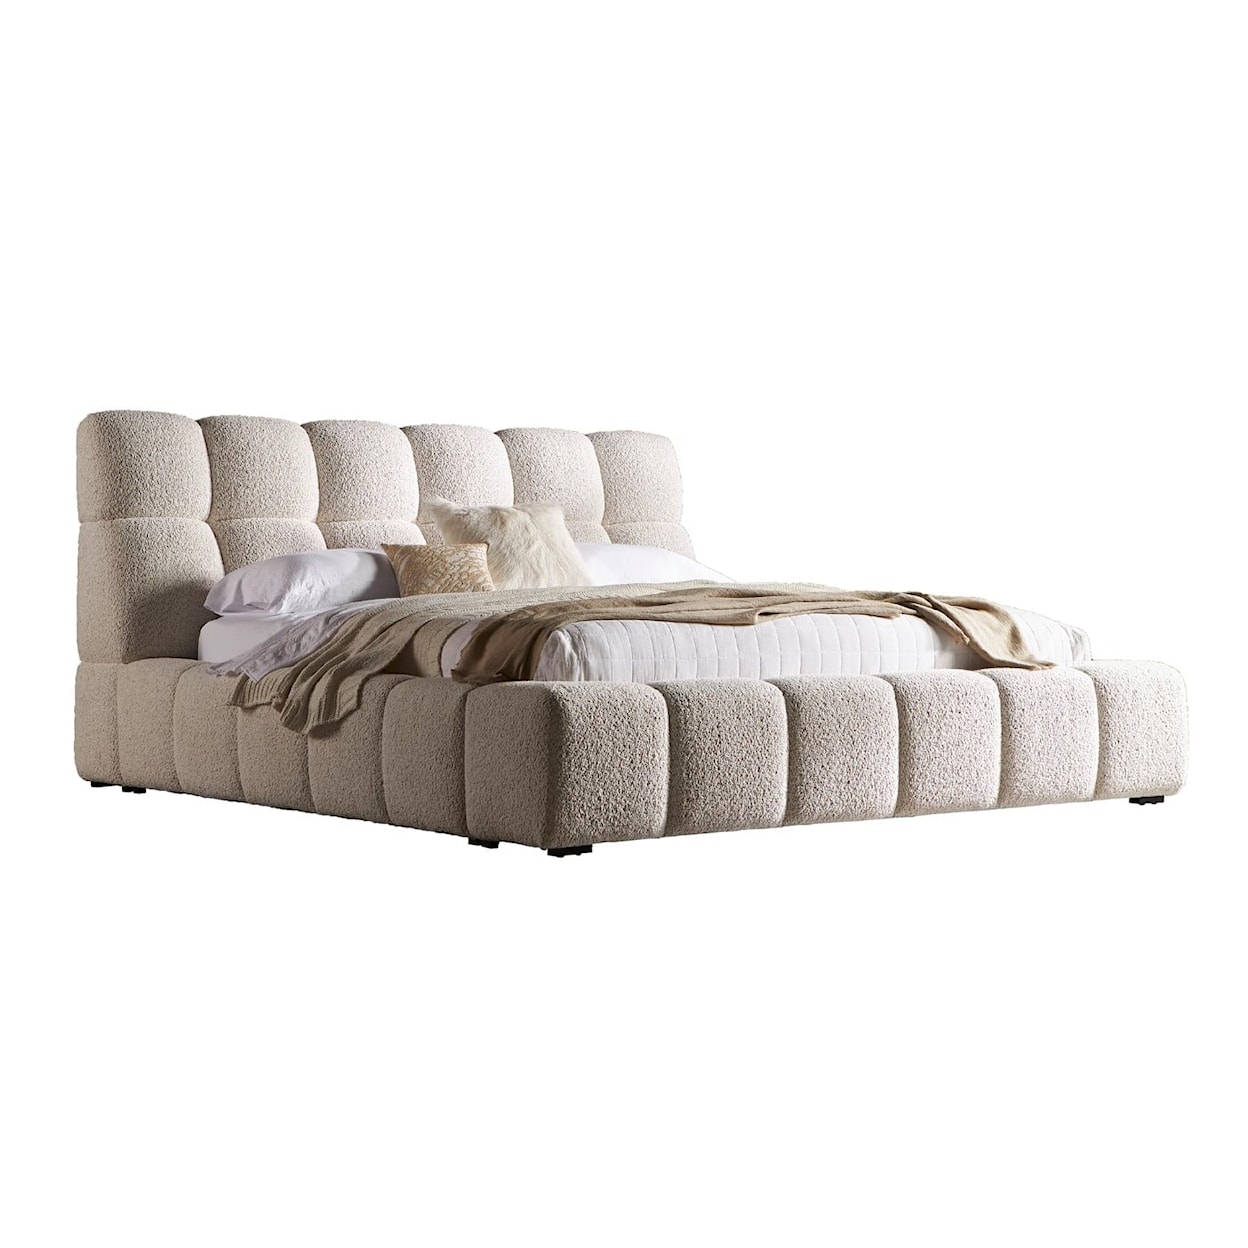 Carolina Living Escape Queen Upholstered Panel Bed